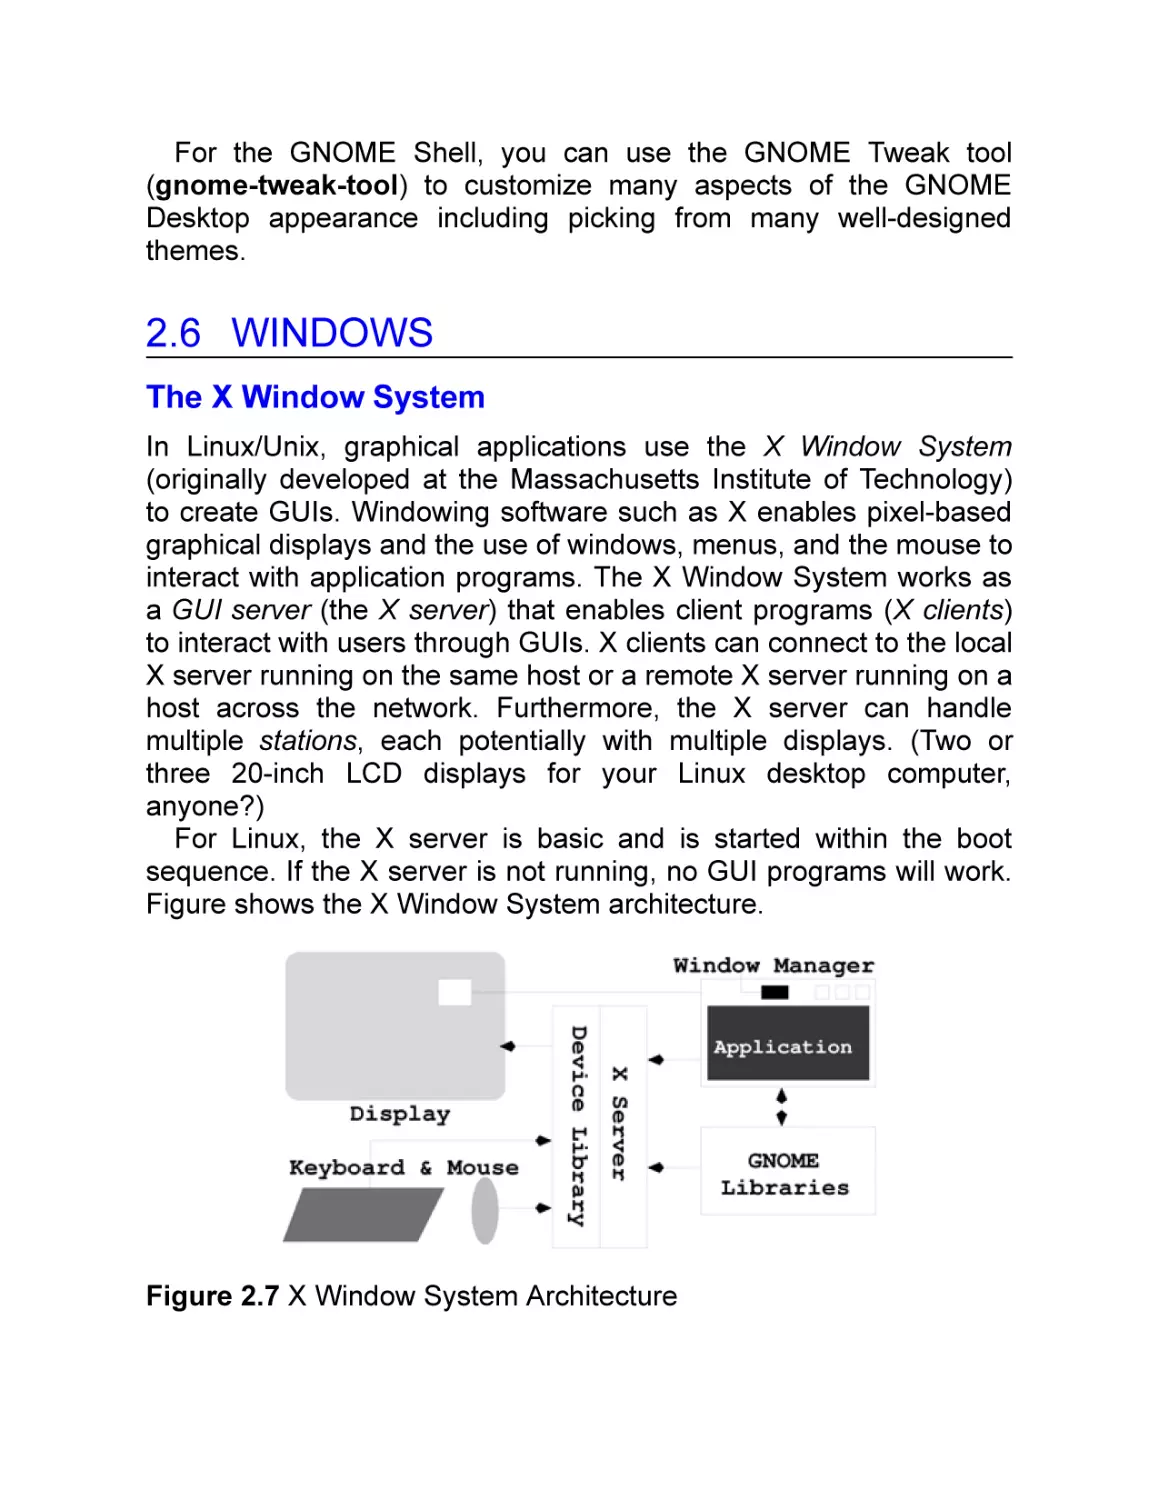 2.6 Windows
The X Window System